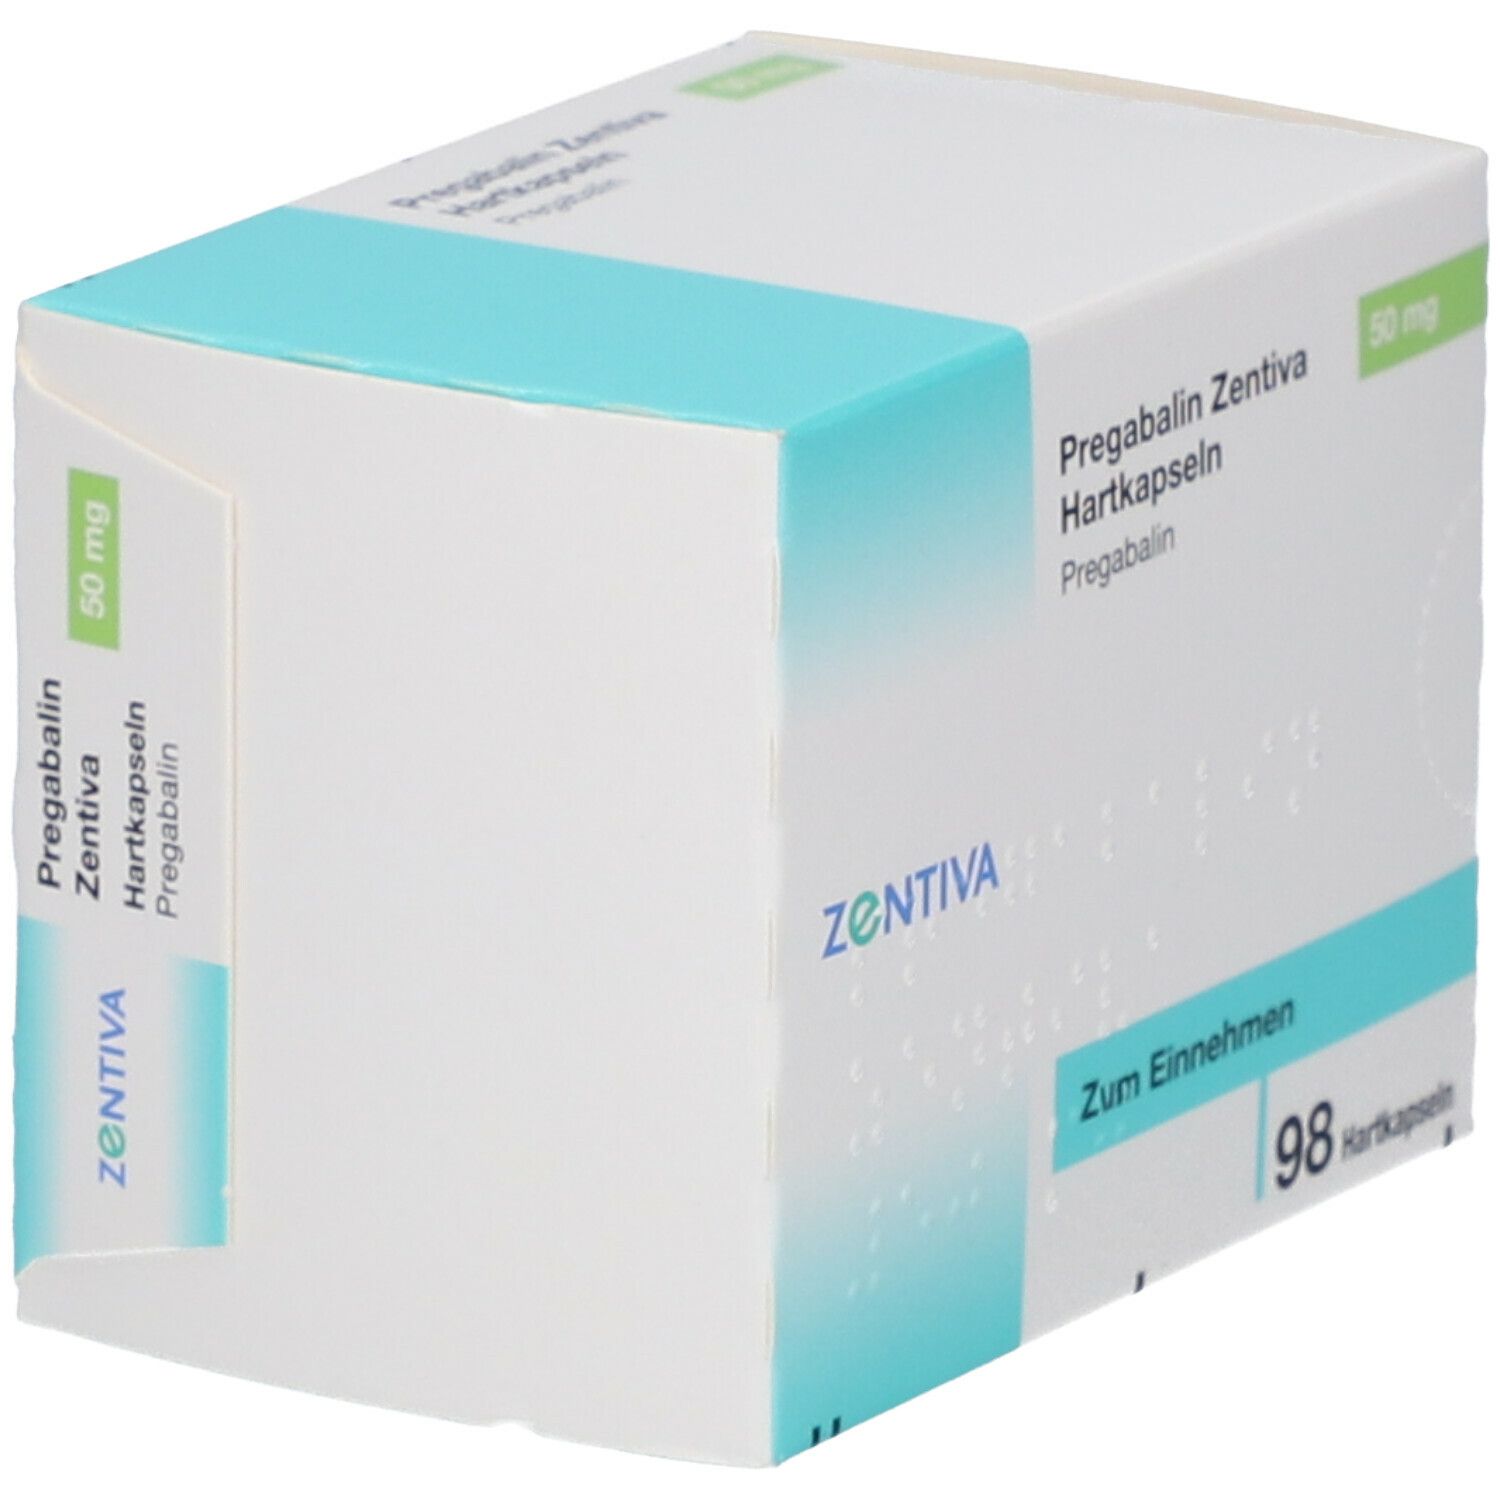 Pregabalin Zentiva® 50 mg